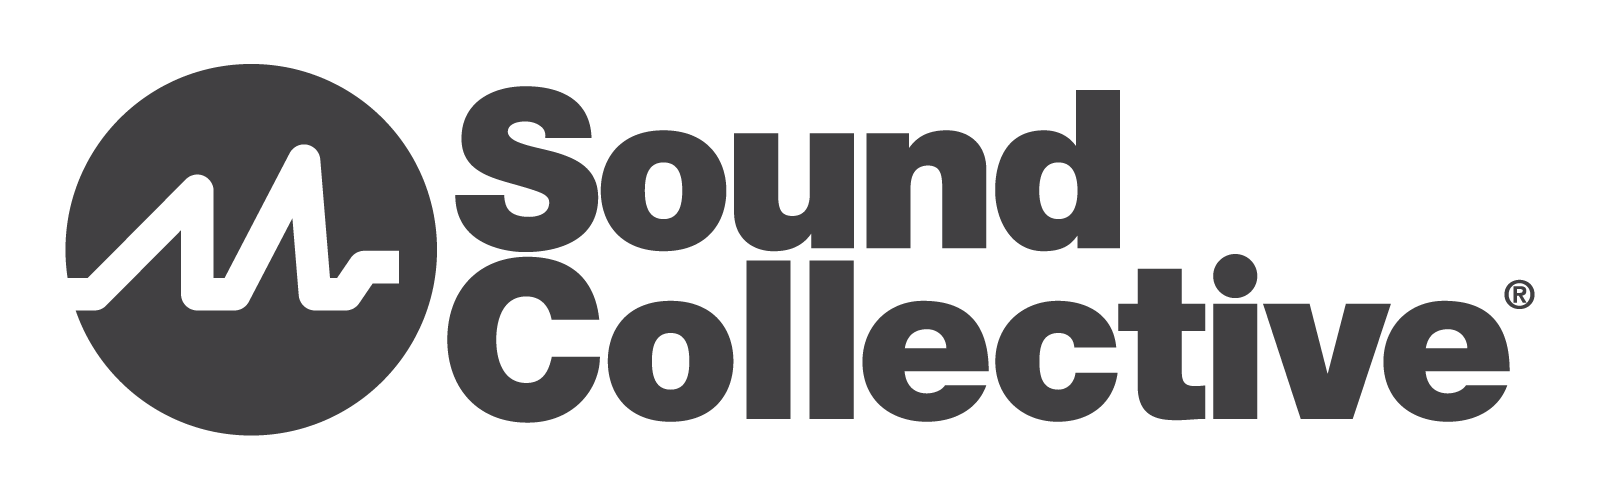 soundcollective,sound collective,the collective,drummers collective,electronic music collective, Contact Us (SC-WEB V2 Draft), SoundCollective